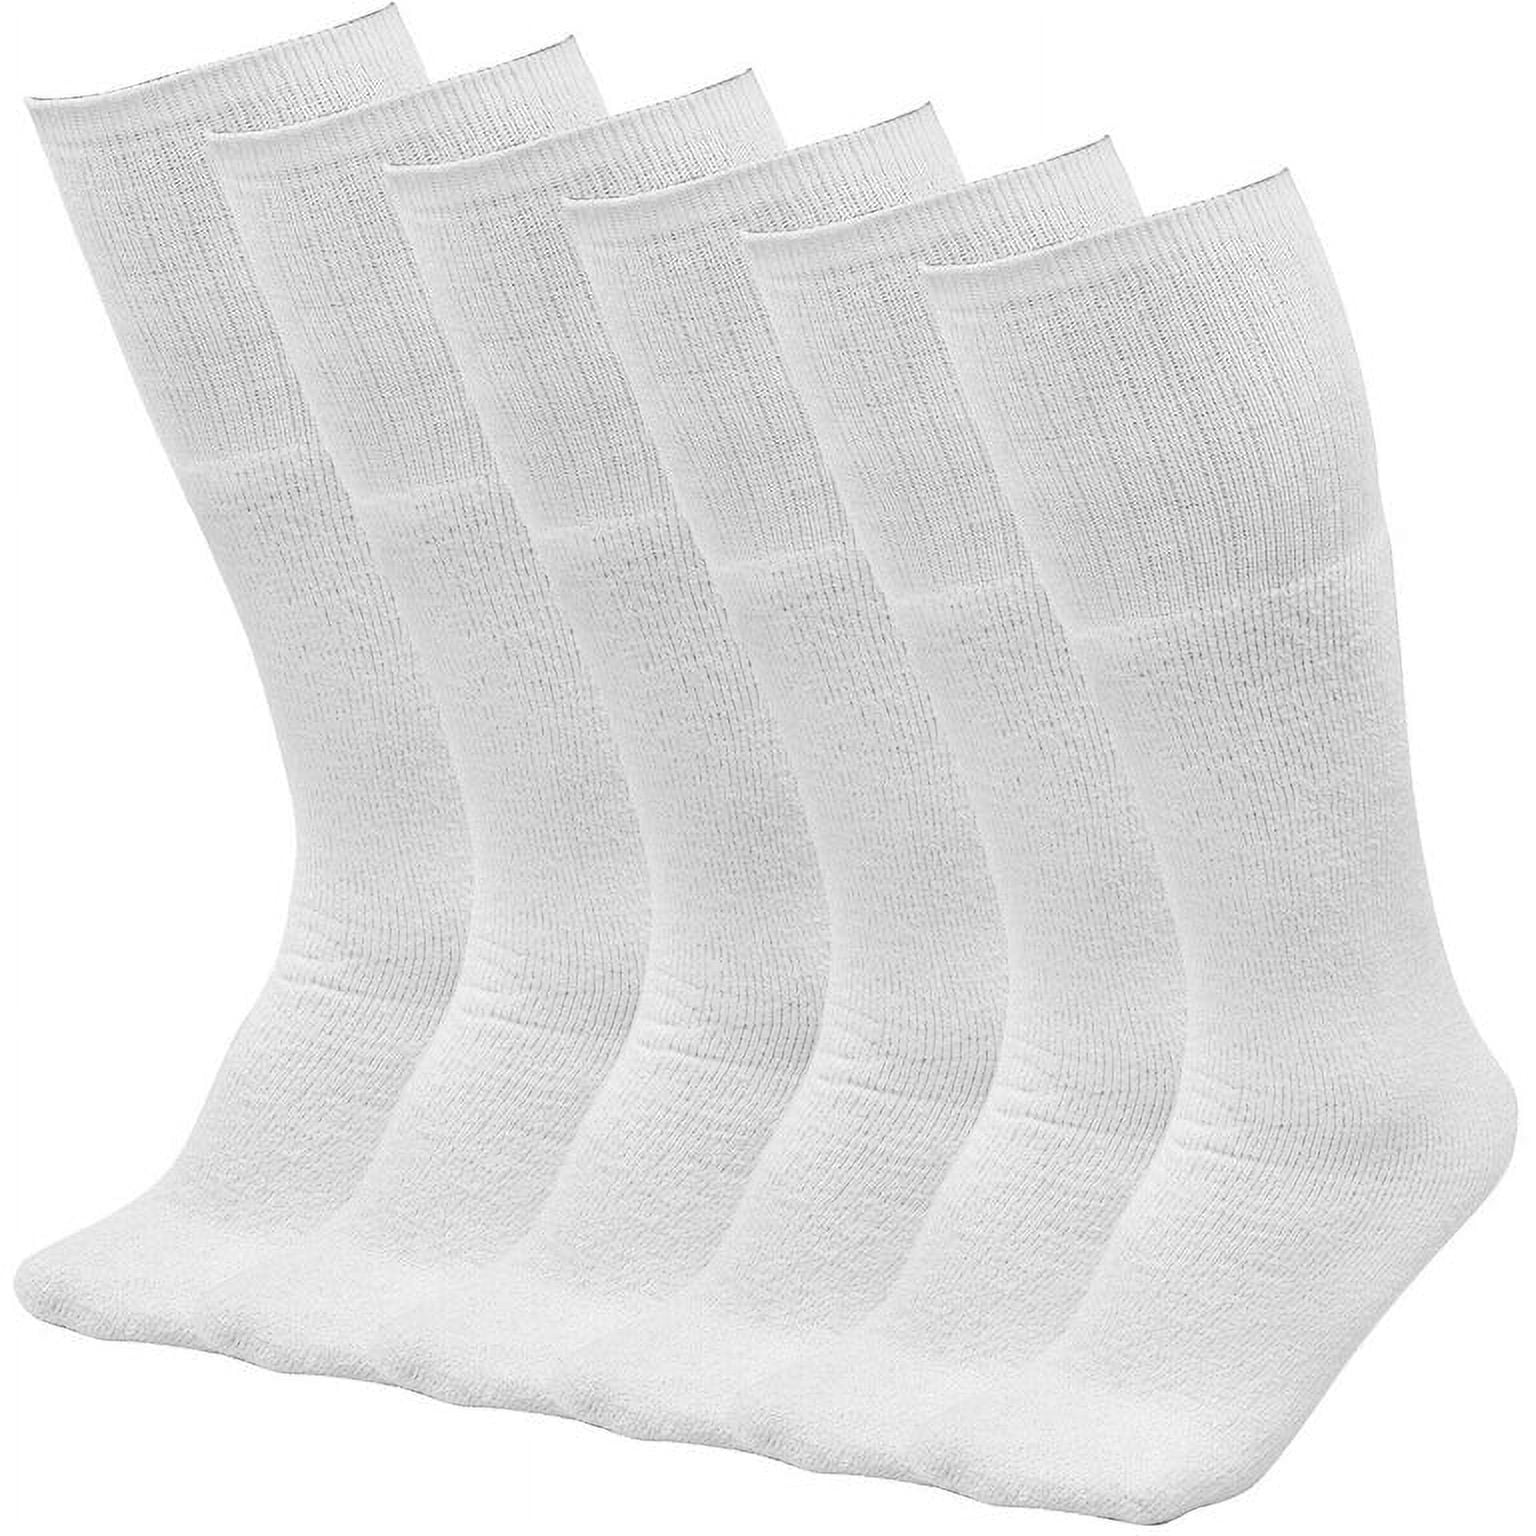 Diamond Star Tube Socks Men 6 Pairs Premium Cushion Cotton Over The ...